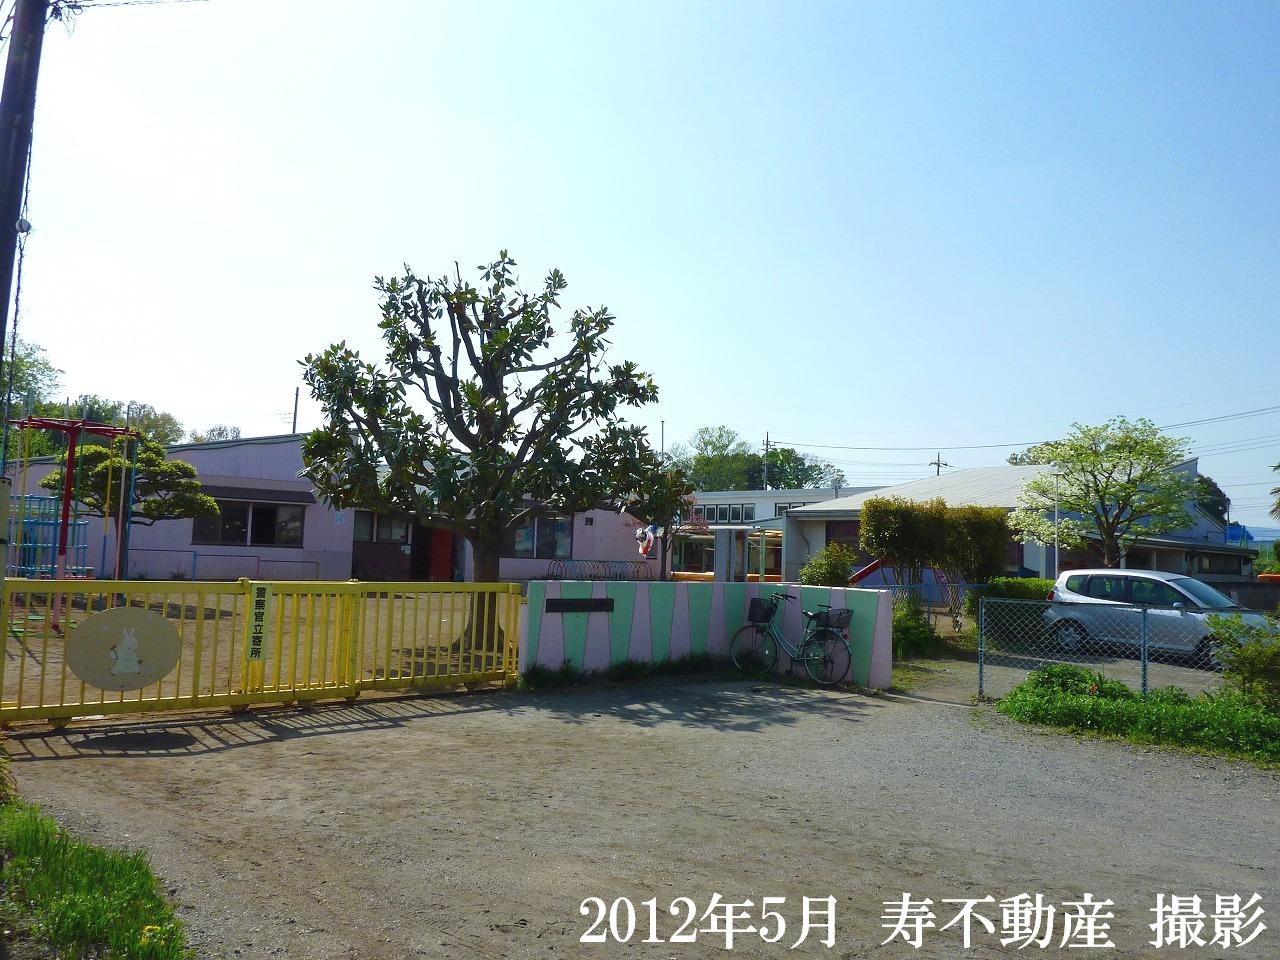 kindergarten ・ Nursery. Okegawa Hideya nursery school (kindergarten ・ 540m to the nursery)